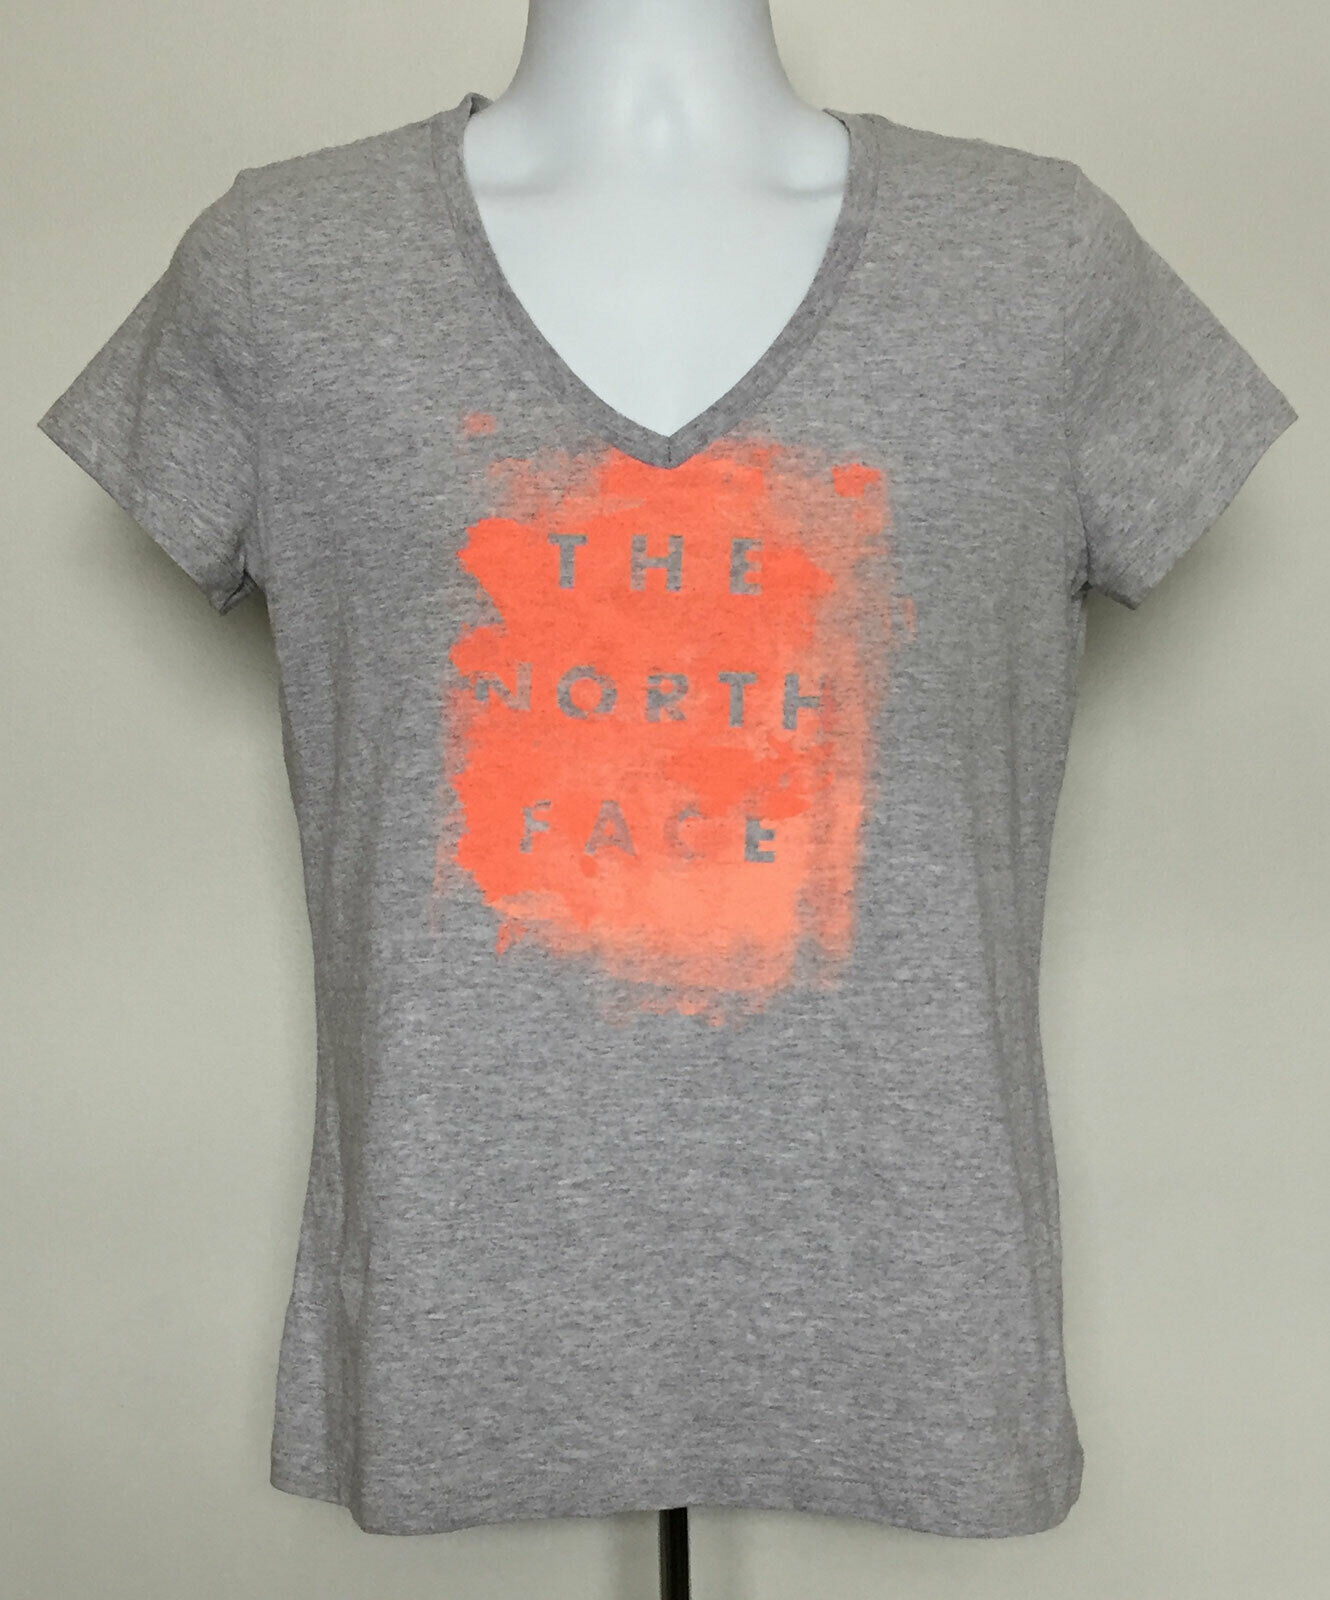 Womens The North face V Neck t shirt medium classic fit orange paint ball logo - $23.71